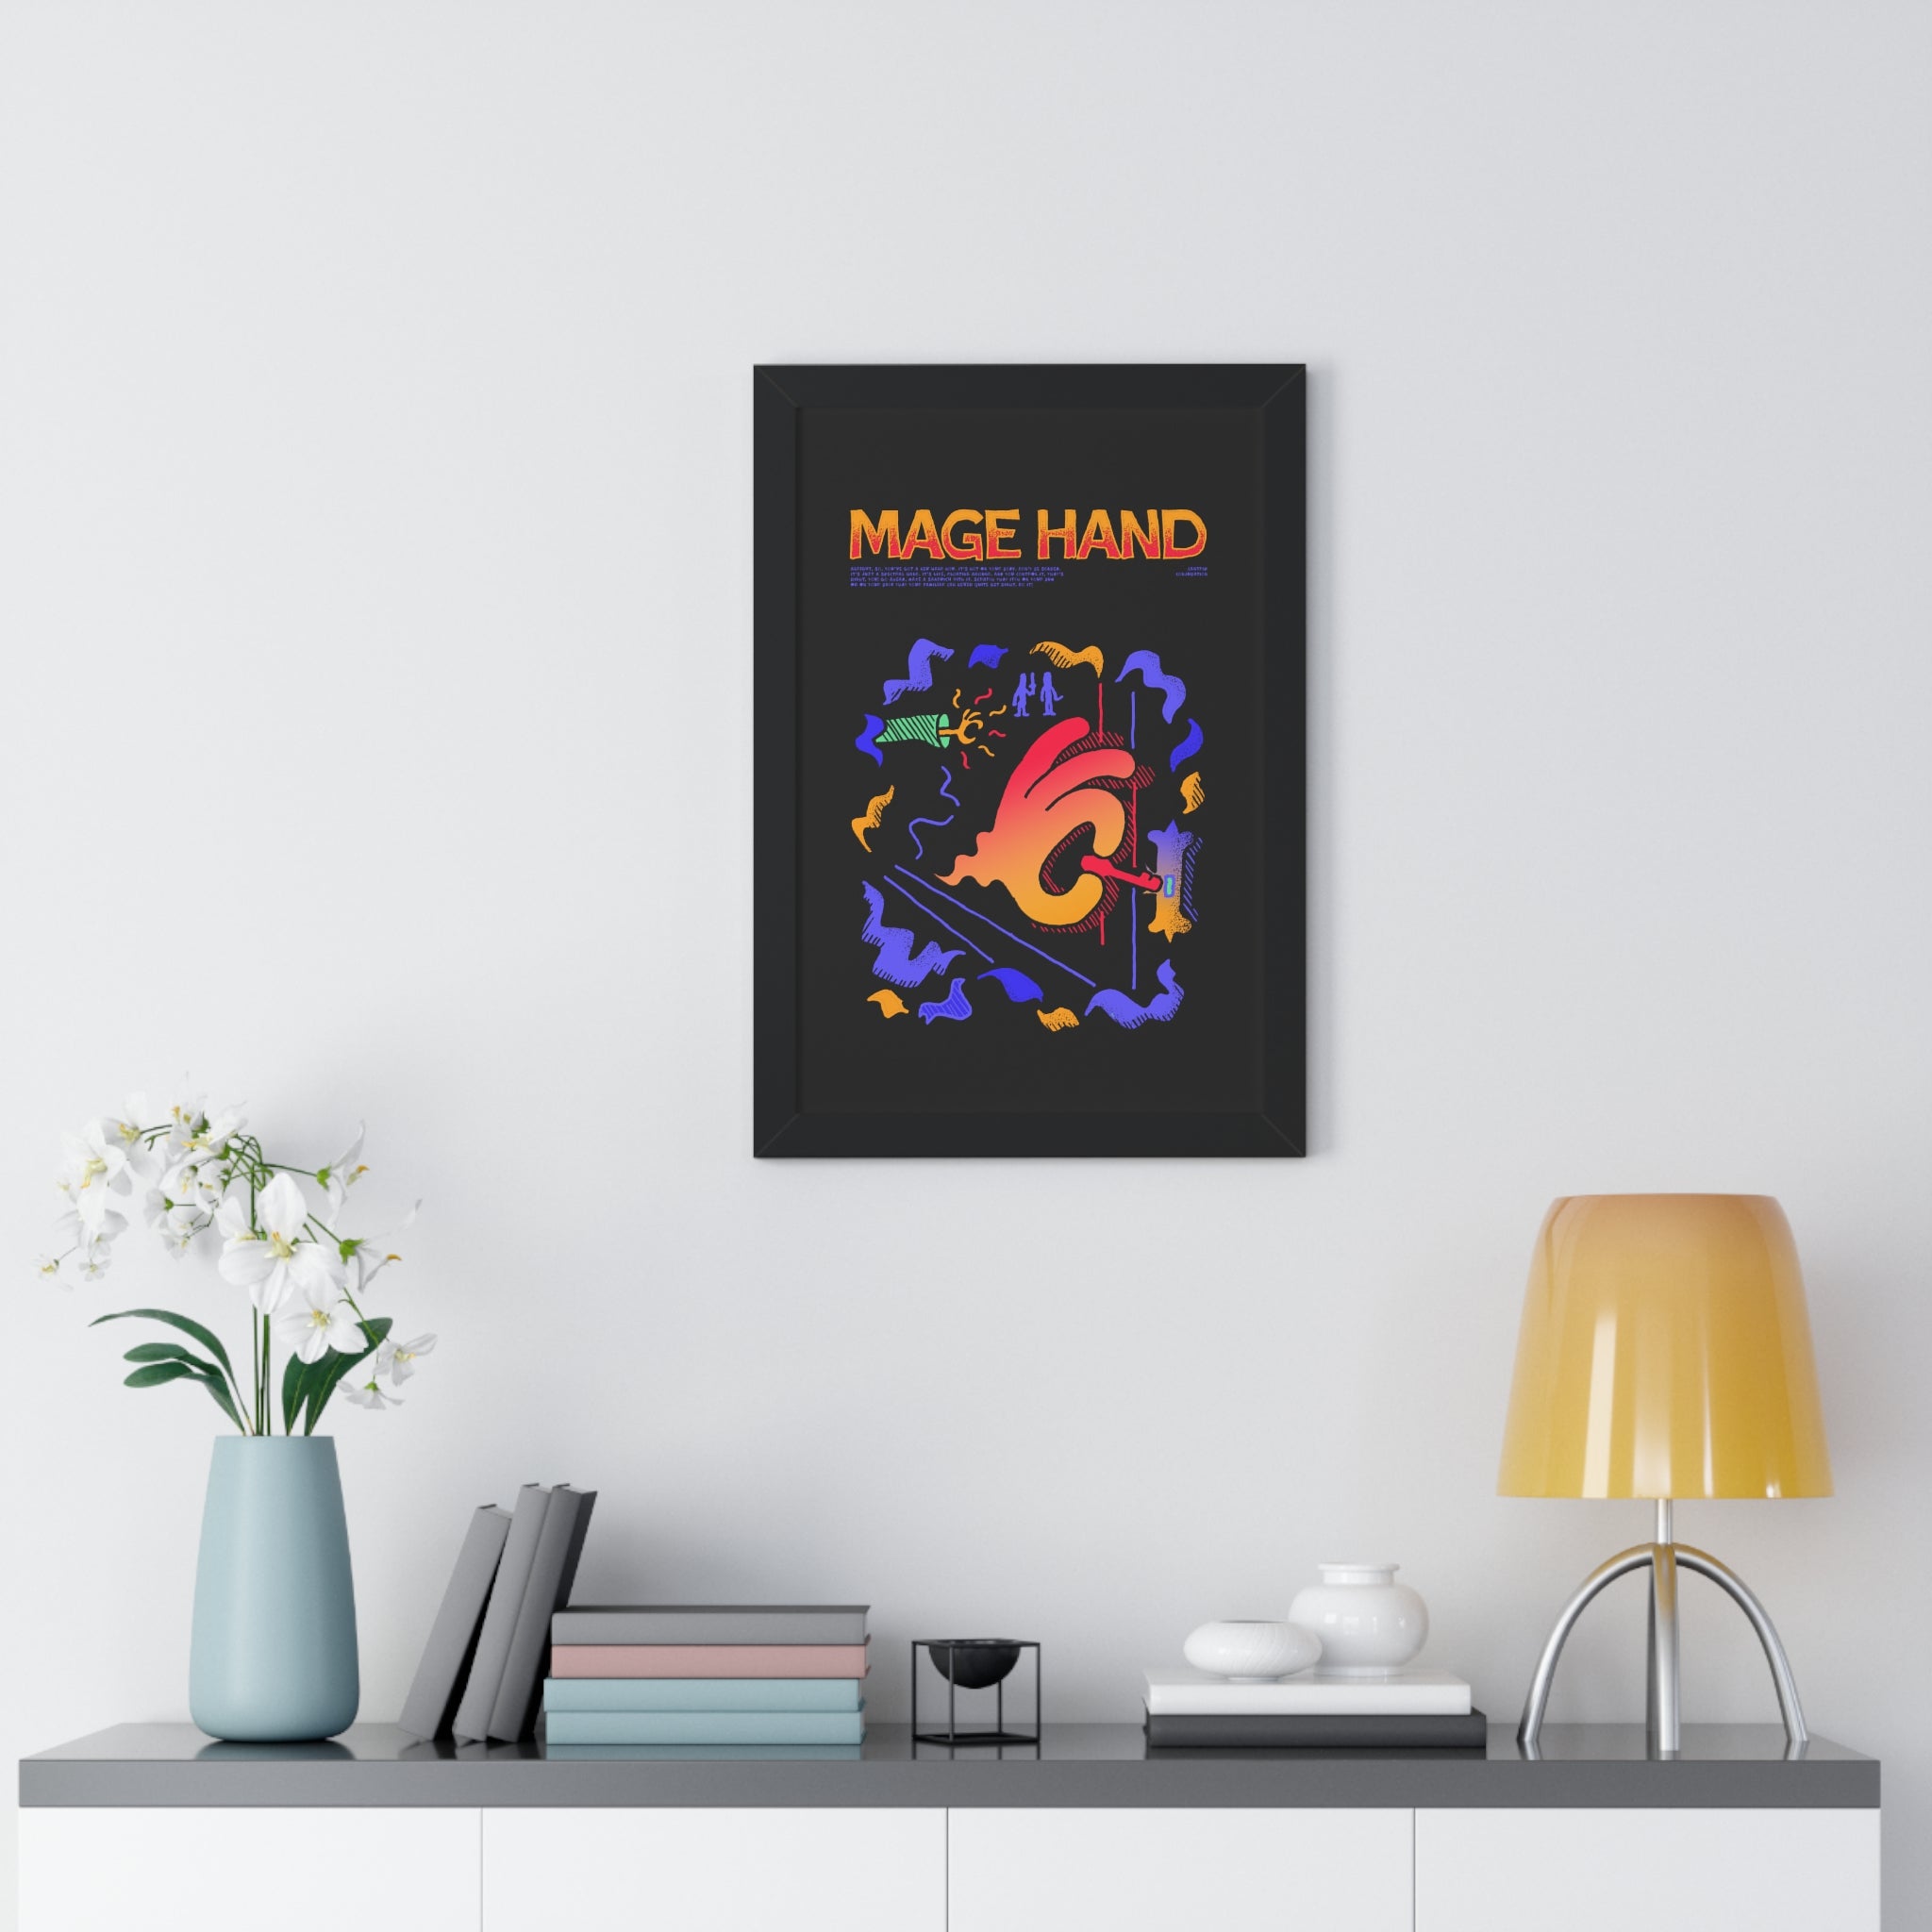 Mage Hand | Framed Poster - Framed Poster - Ace of Gnomes - 25468312740670920653